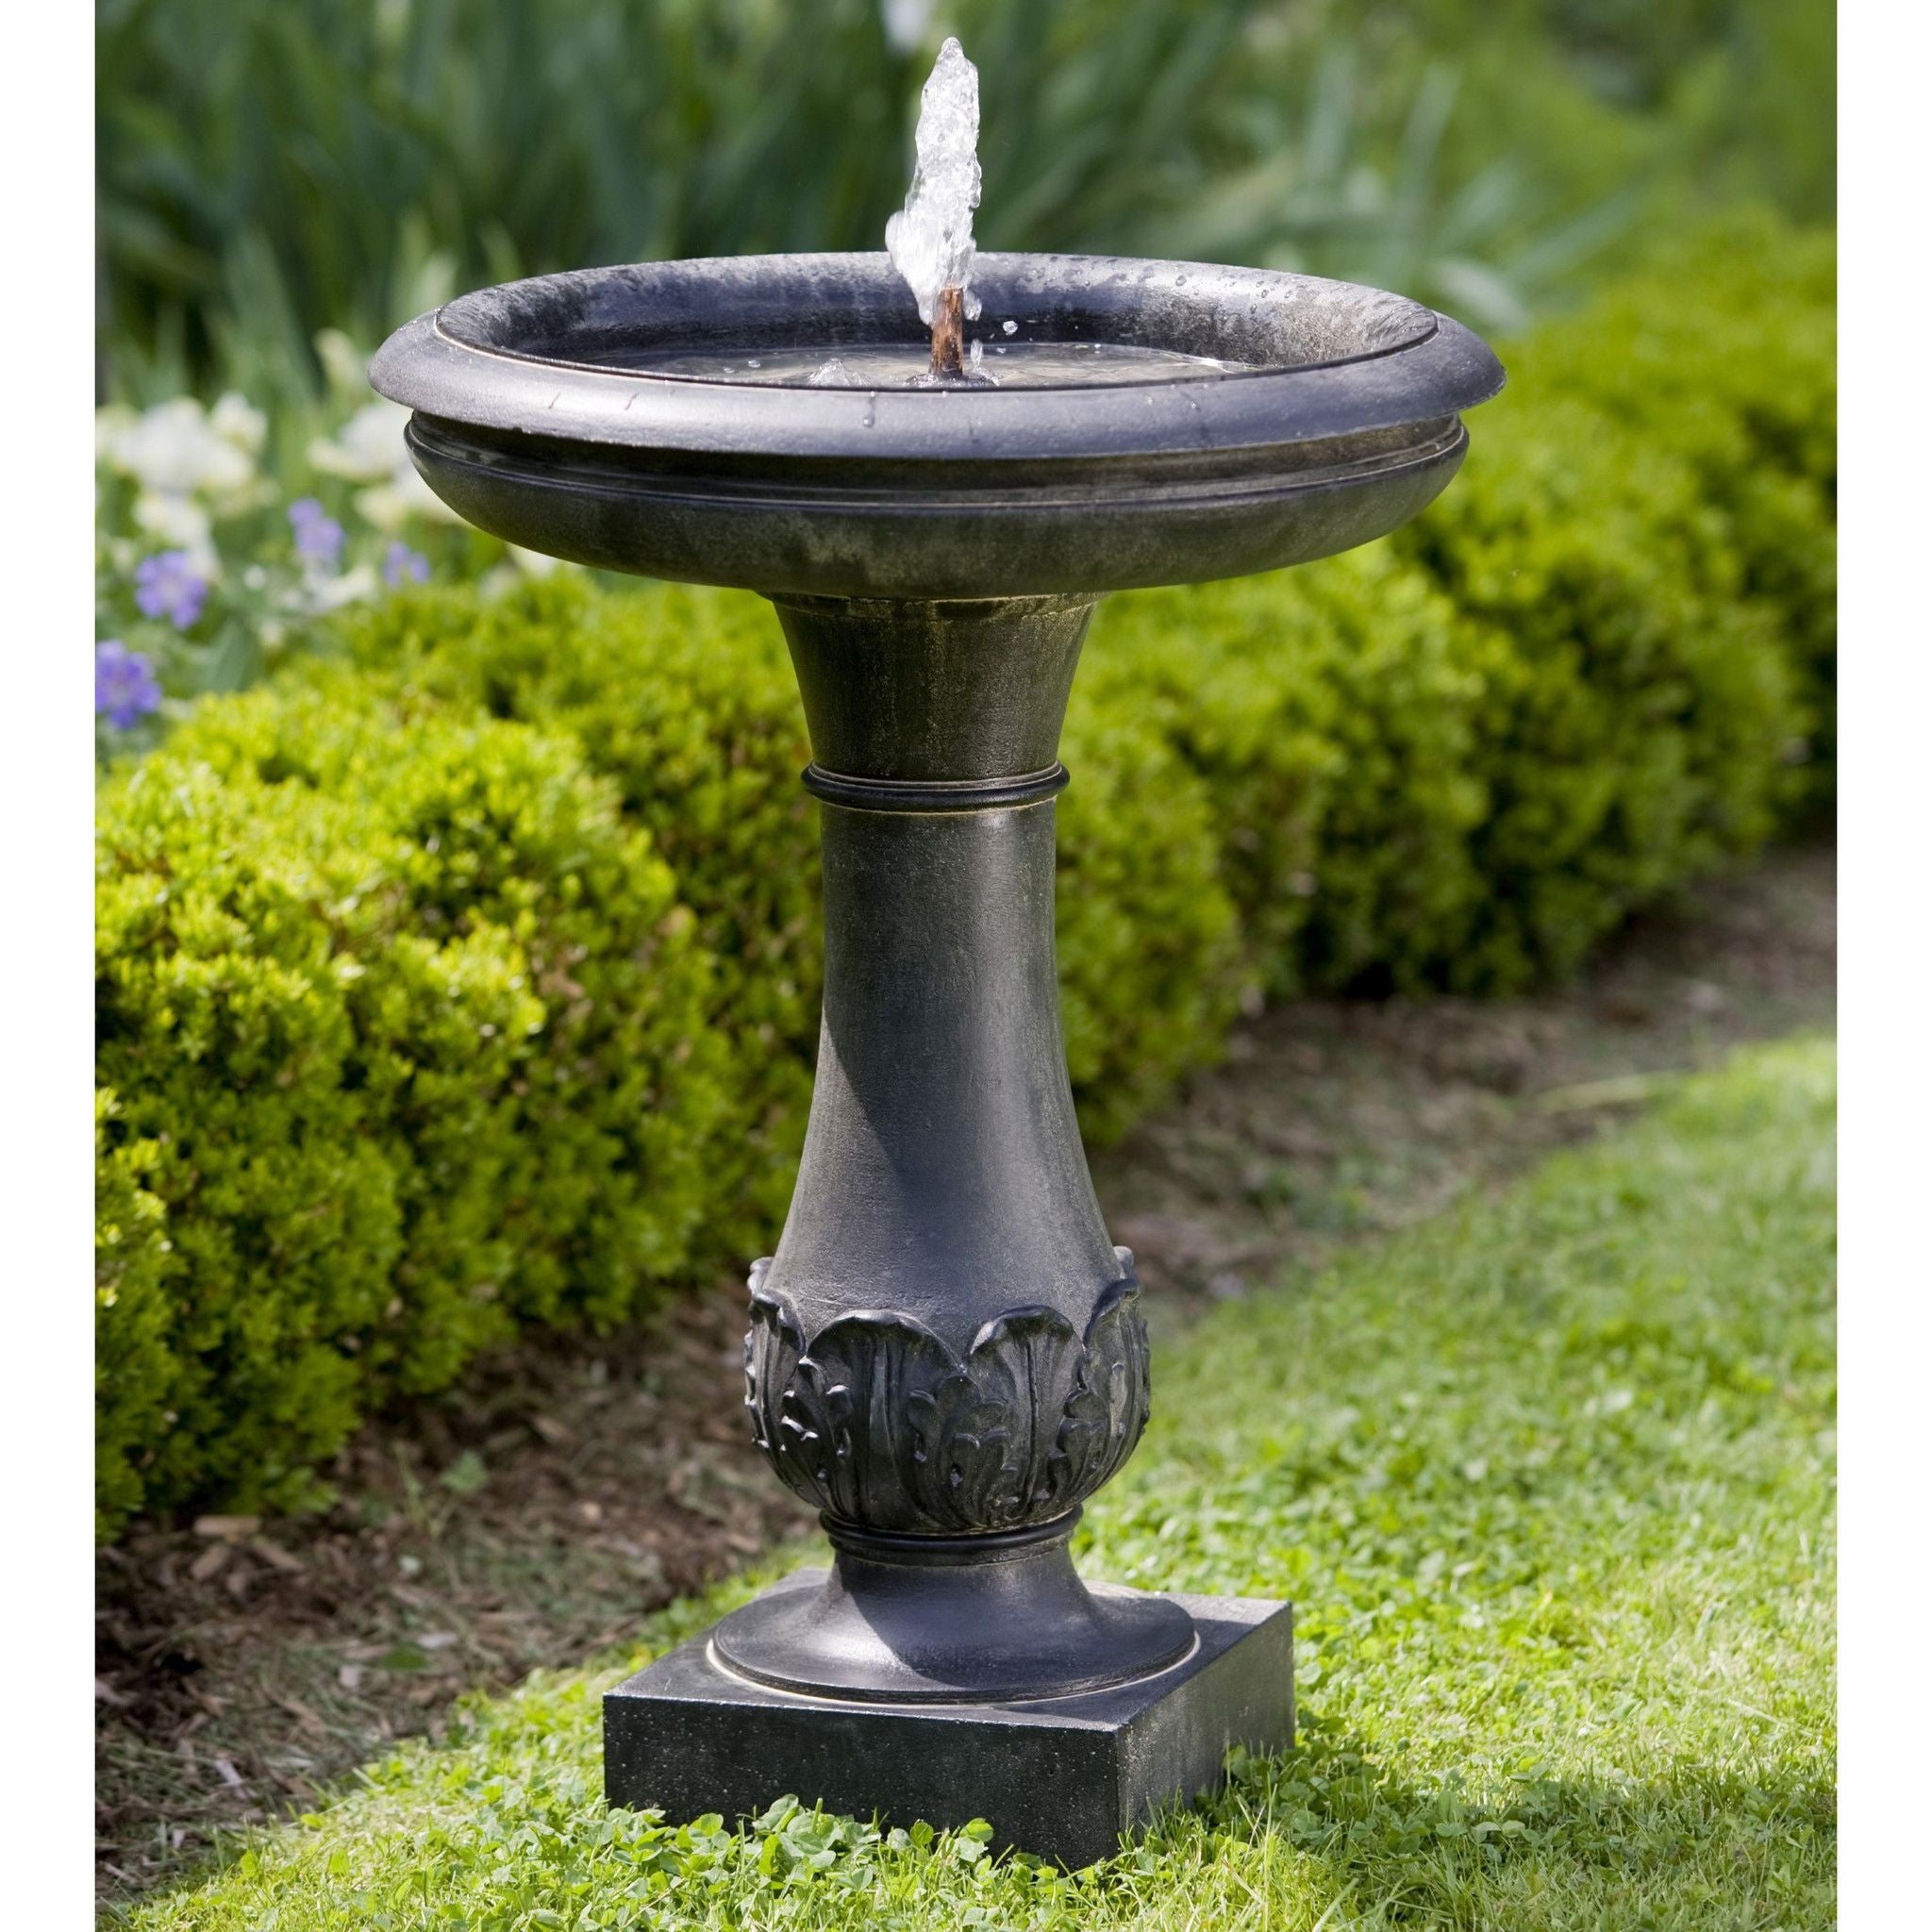 Chatsworth Garden Water Fountain